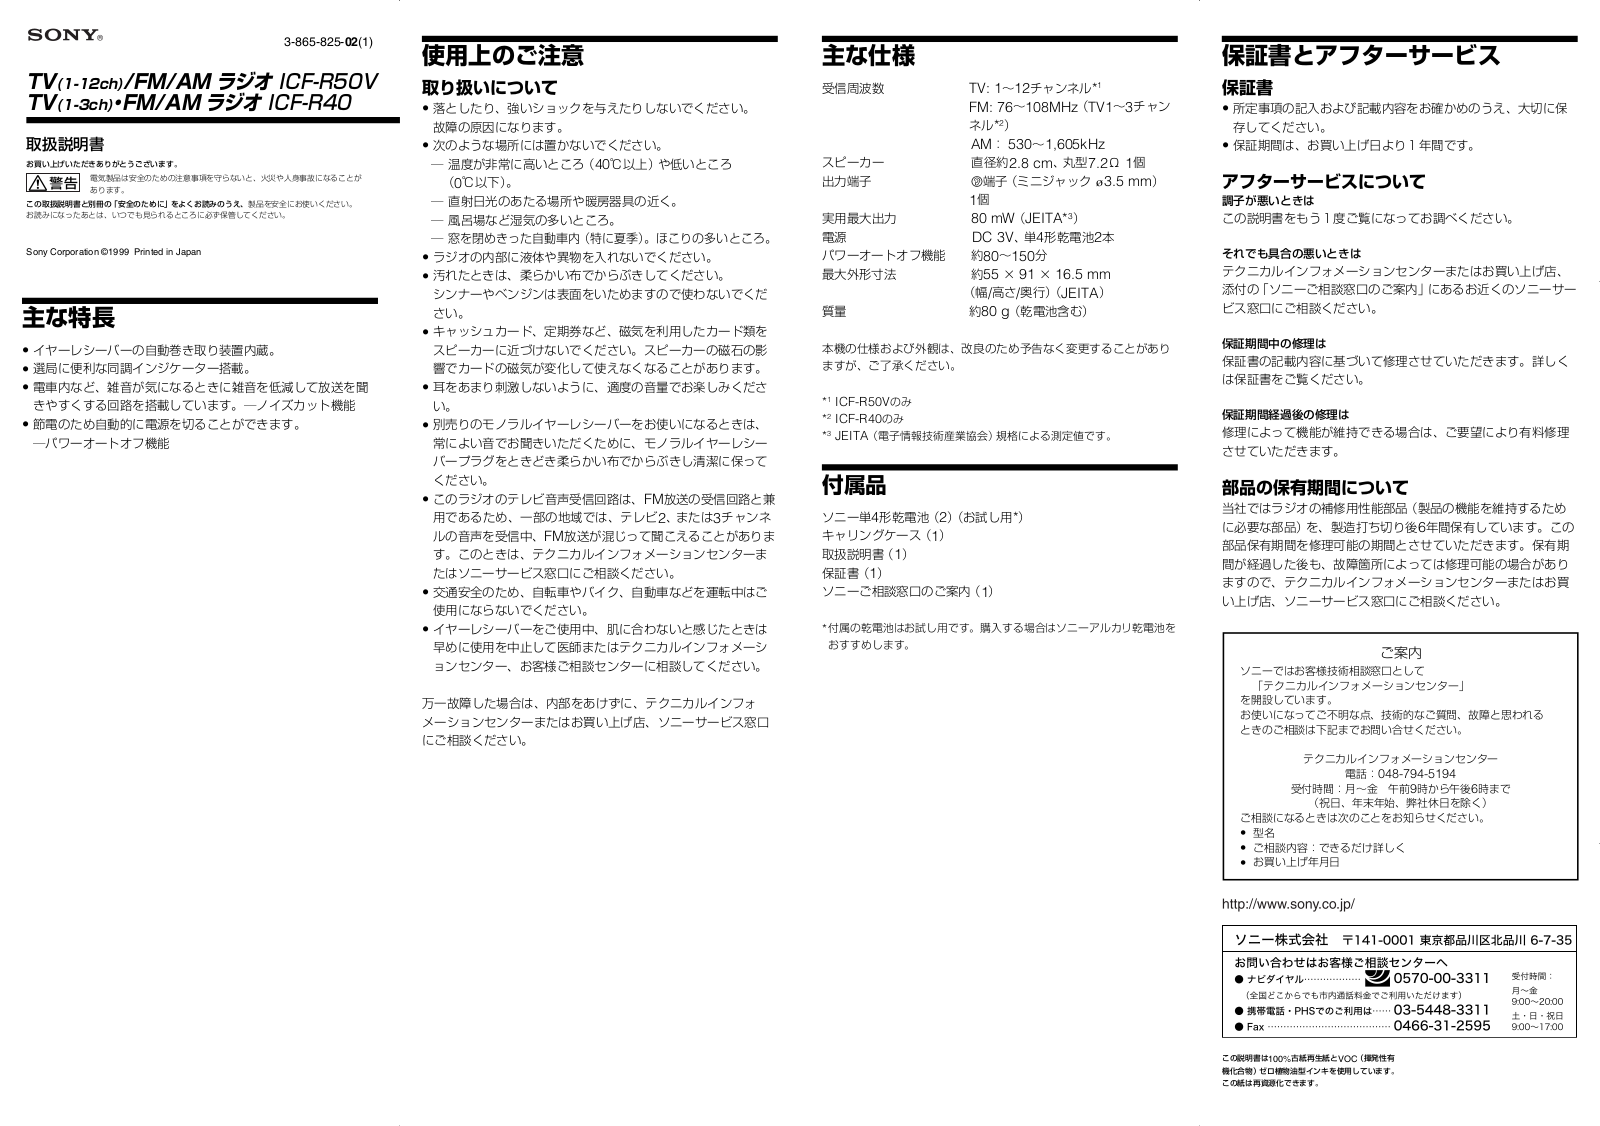 SONY ICF-R50V, ICF-R40 User Manual